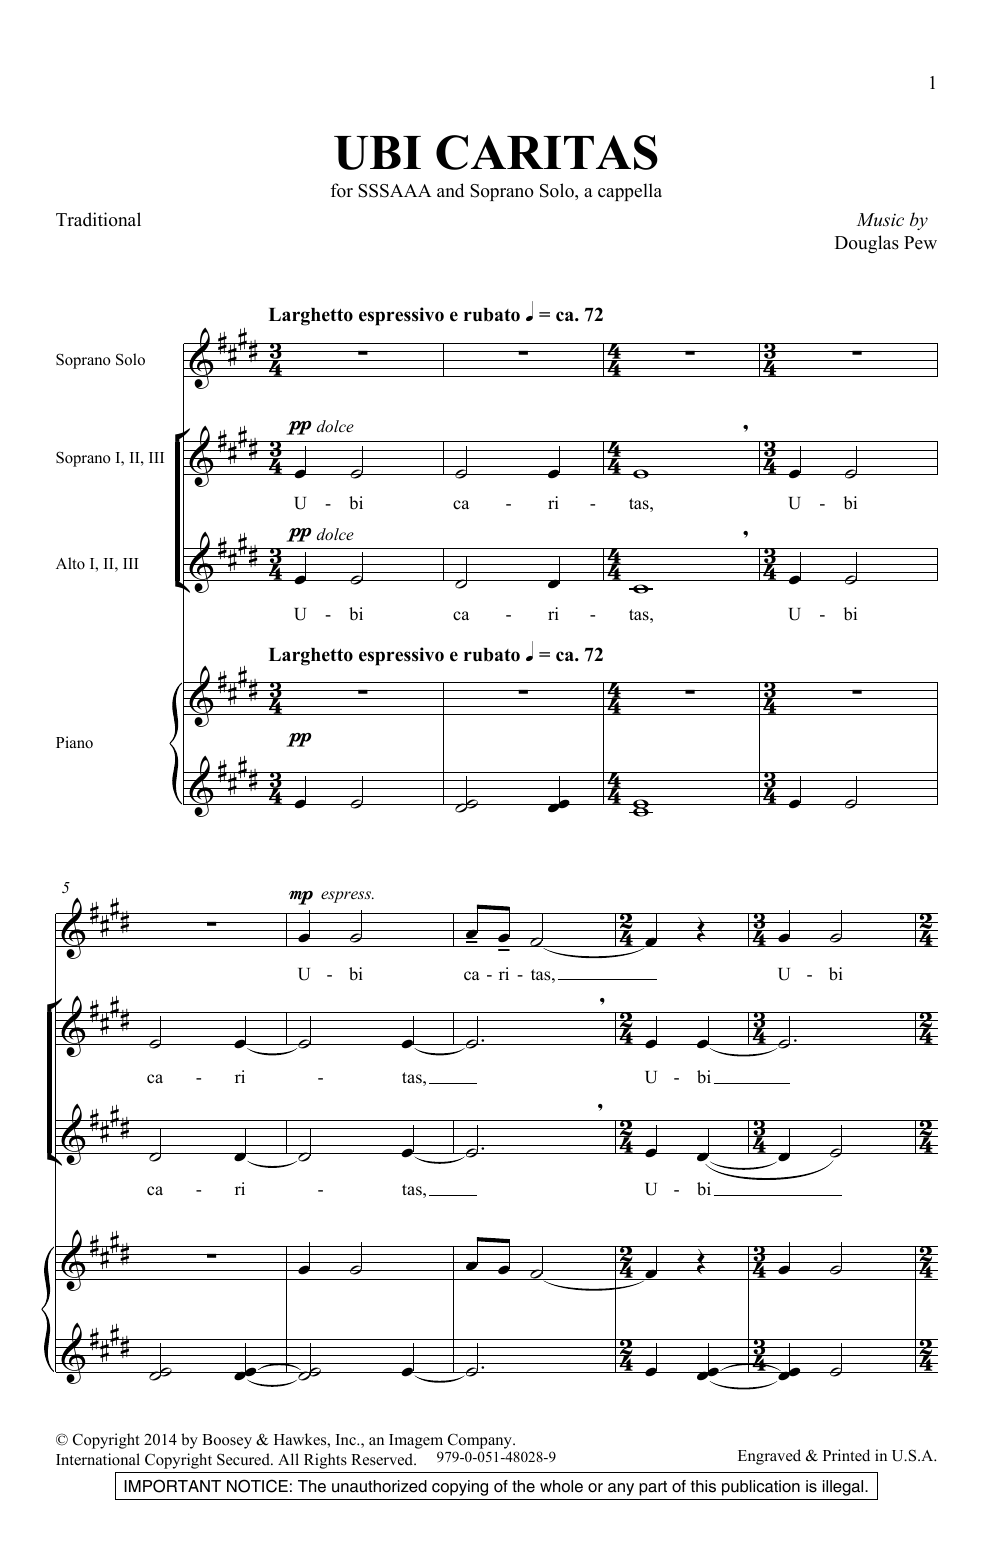 Douglas Pew Ubi Caritas Sheet Music Notes & Chords for SSA Choir - Download or Print PDF